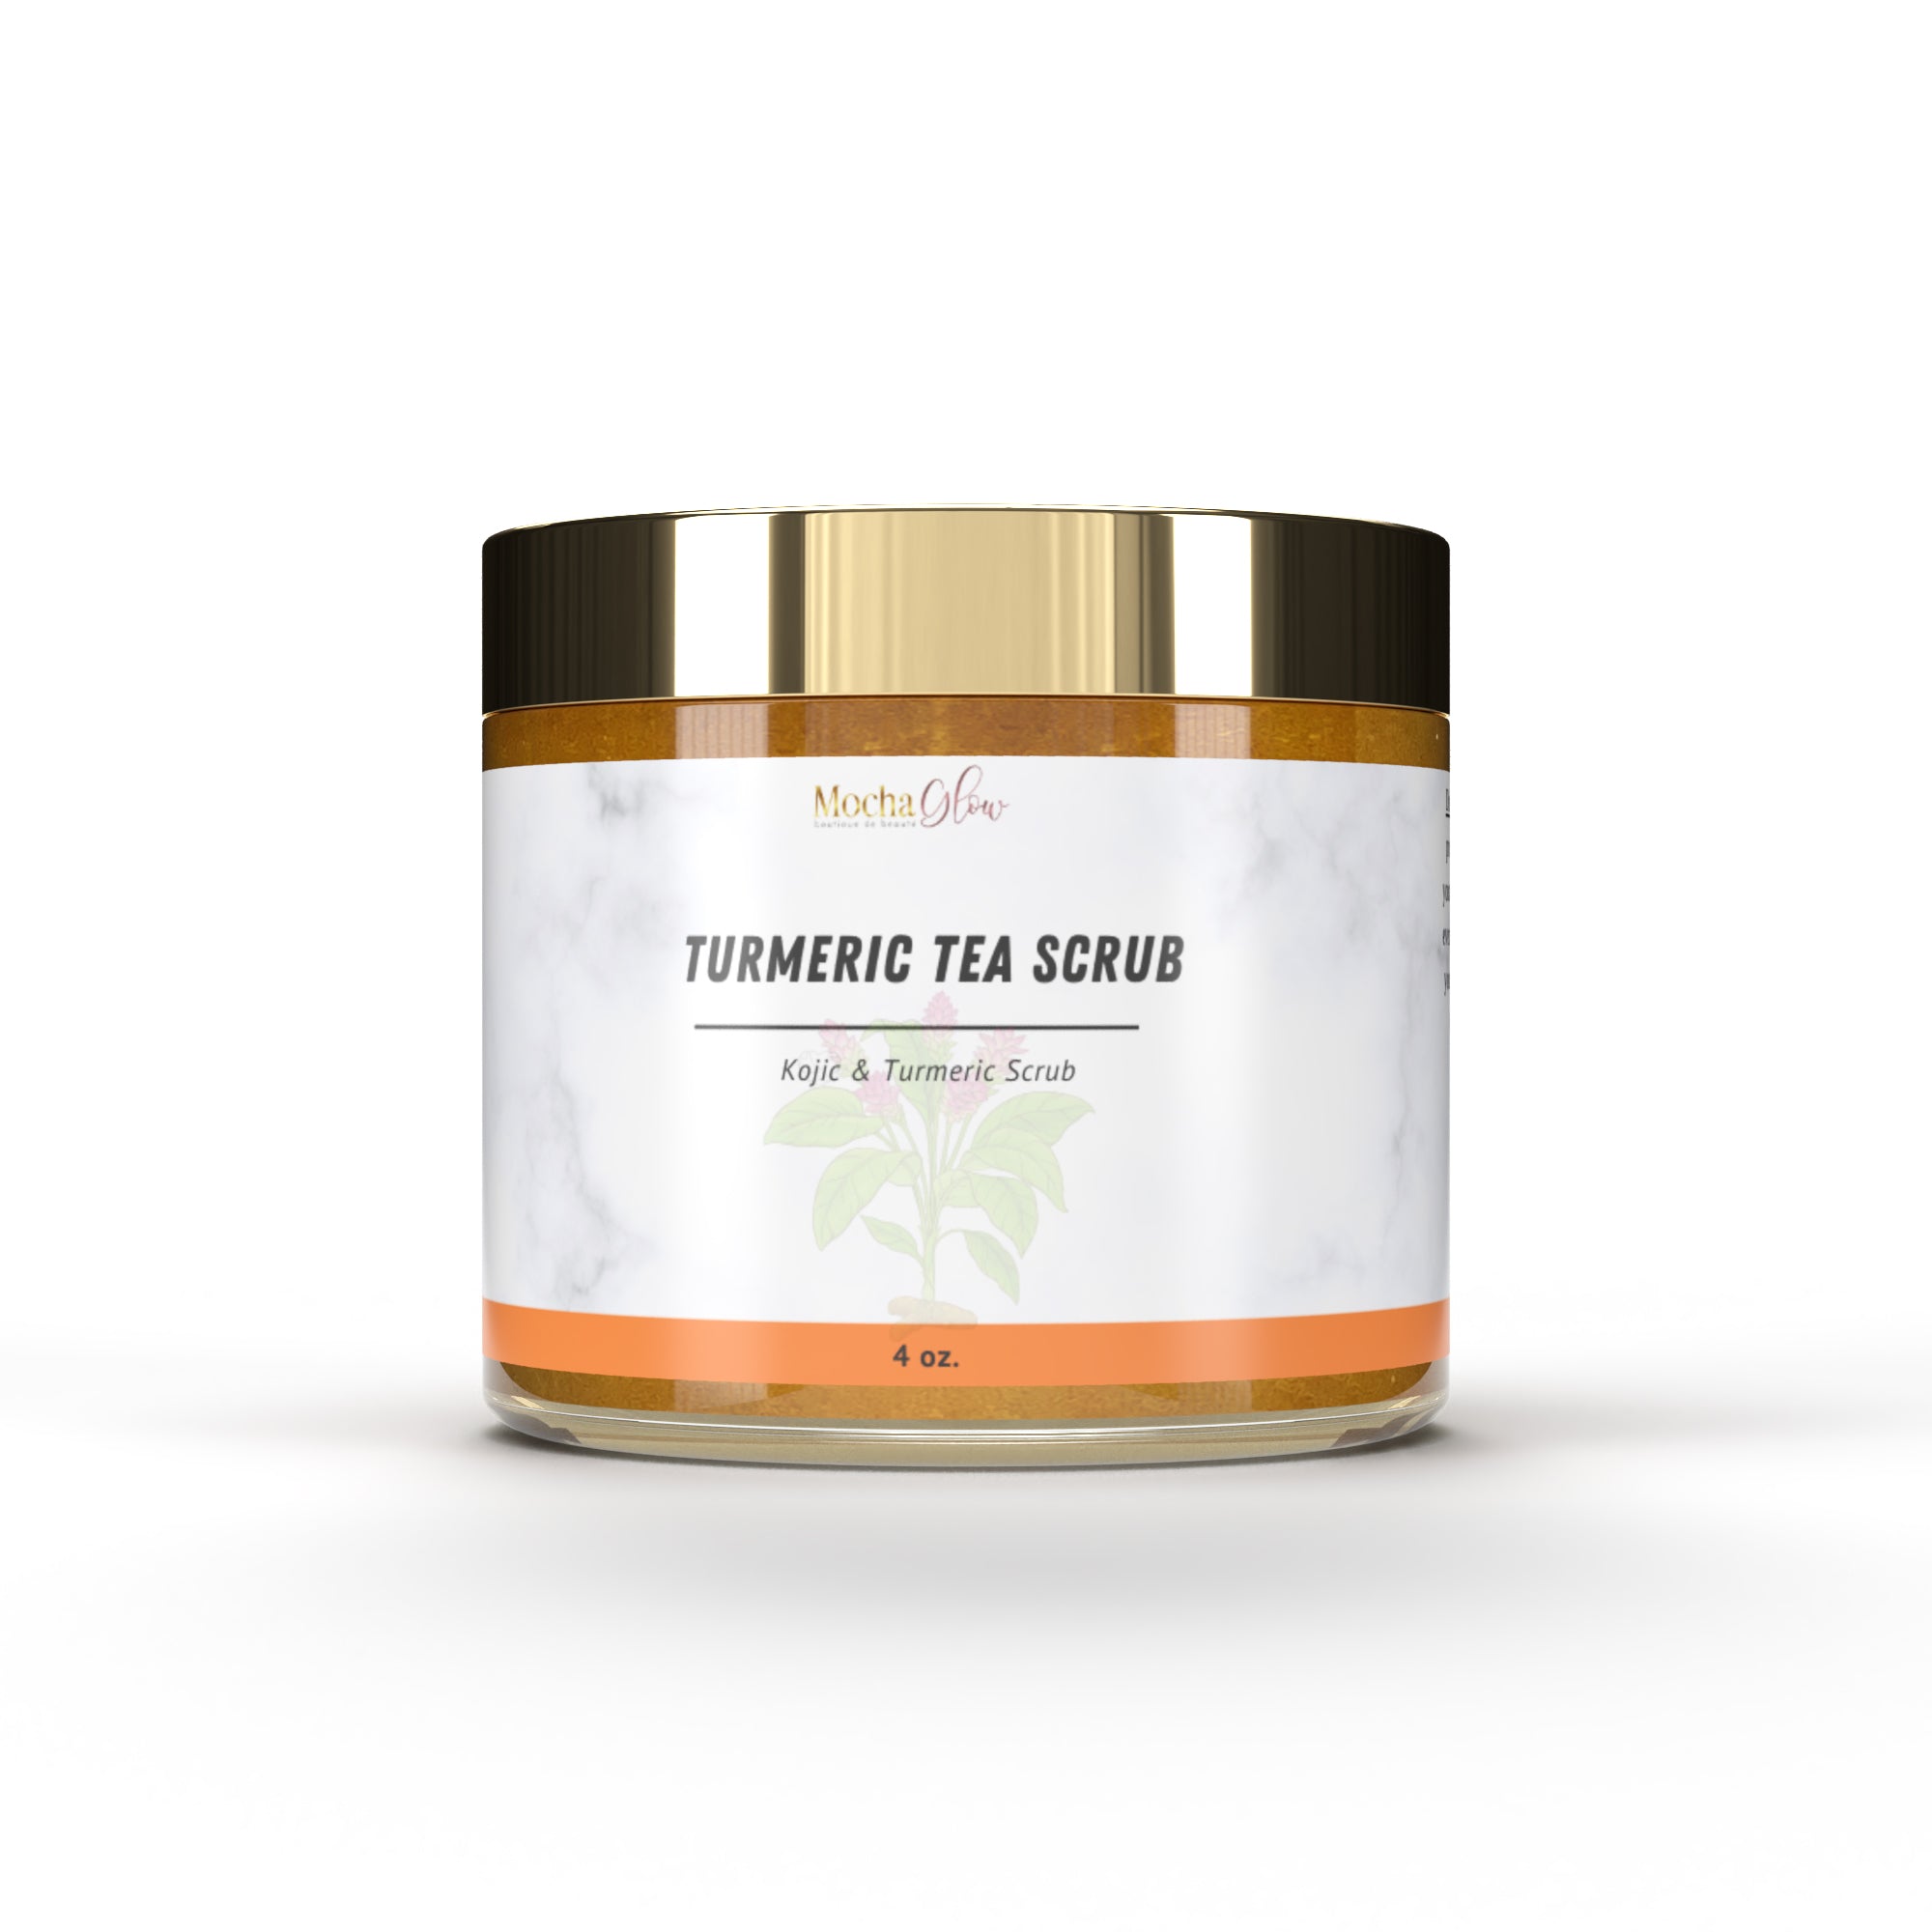 Turmeric Tea Scrub